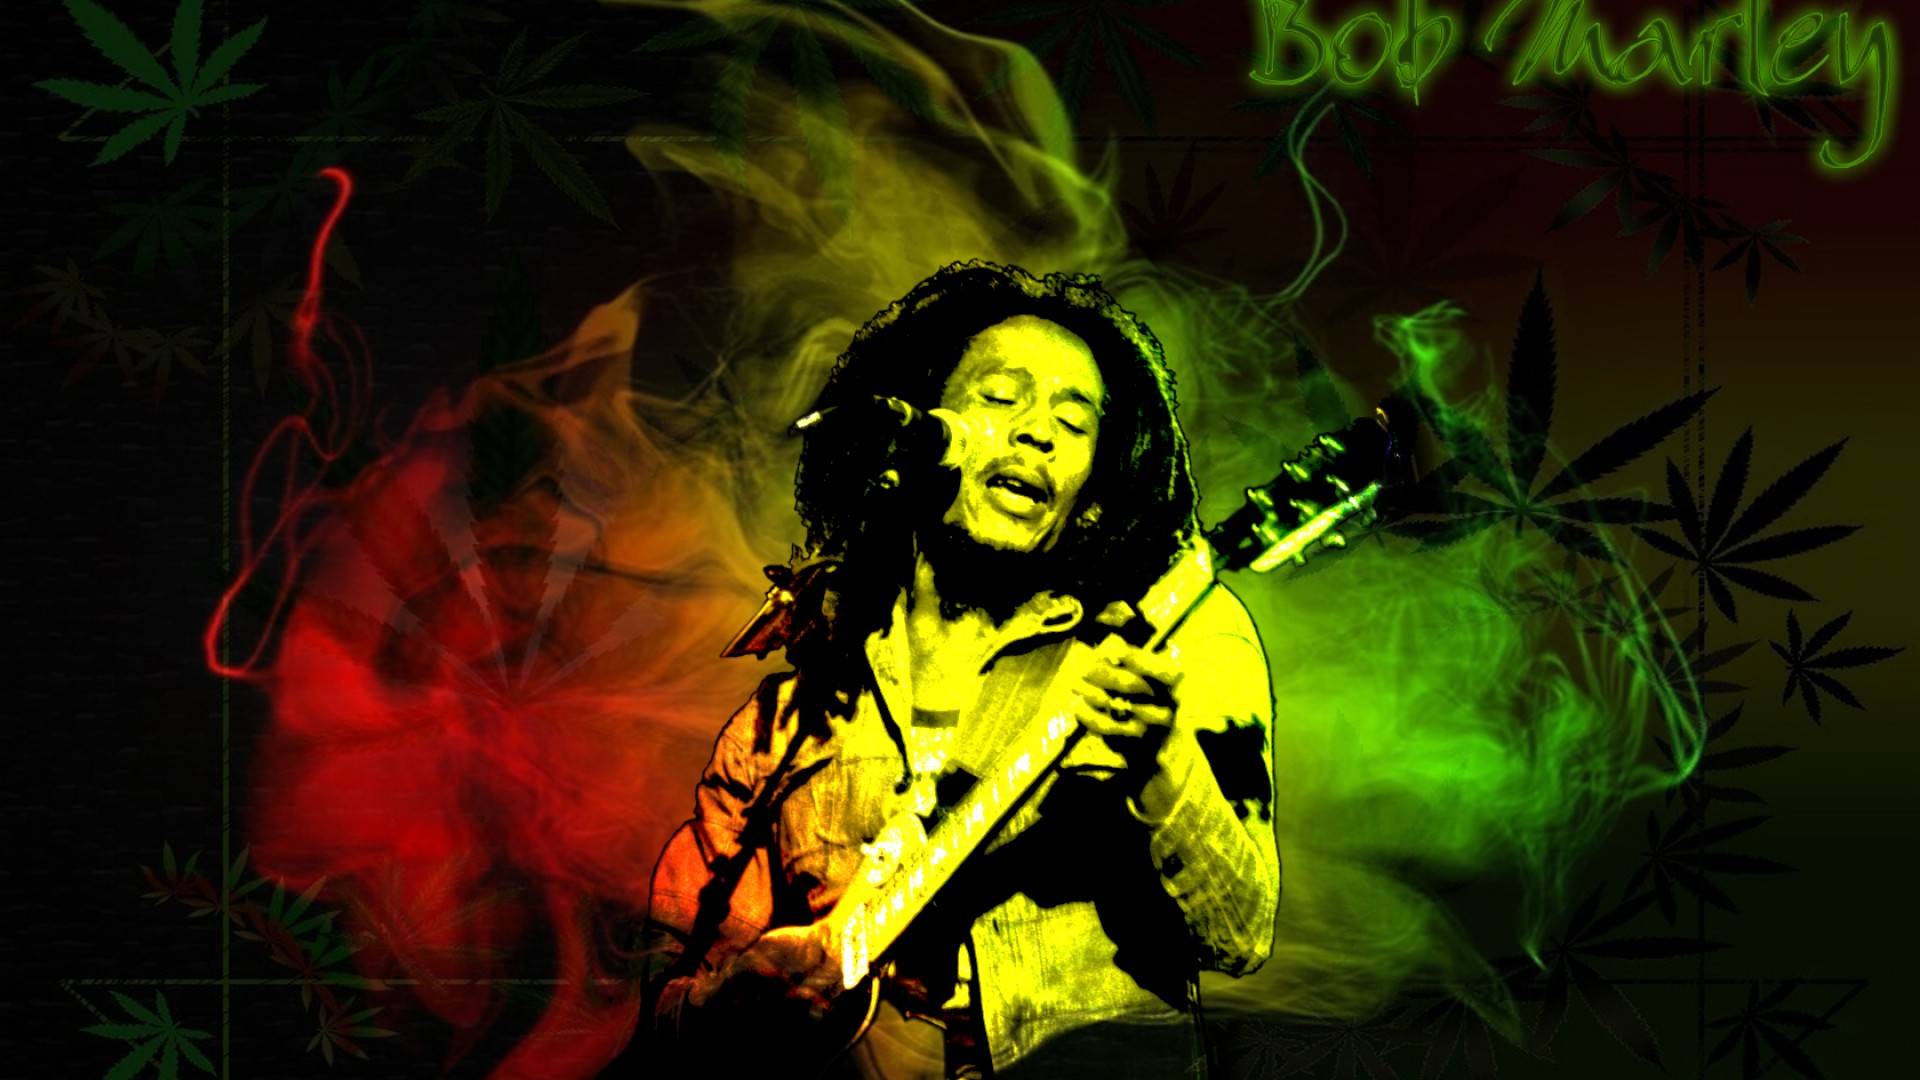 Wallpaper HD Bob Marley